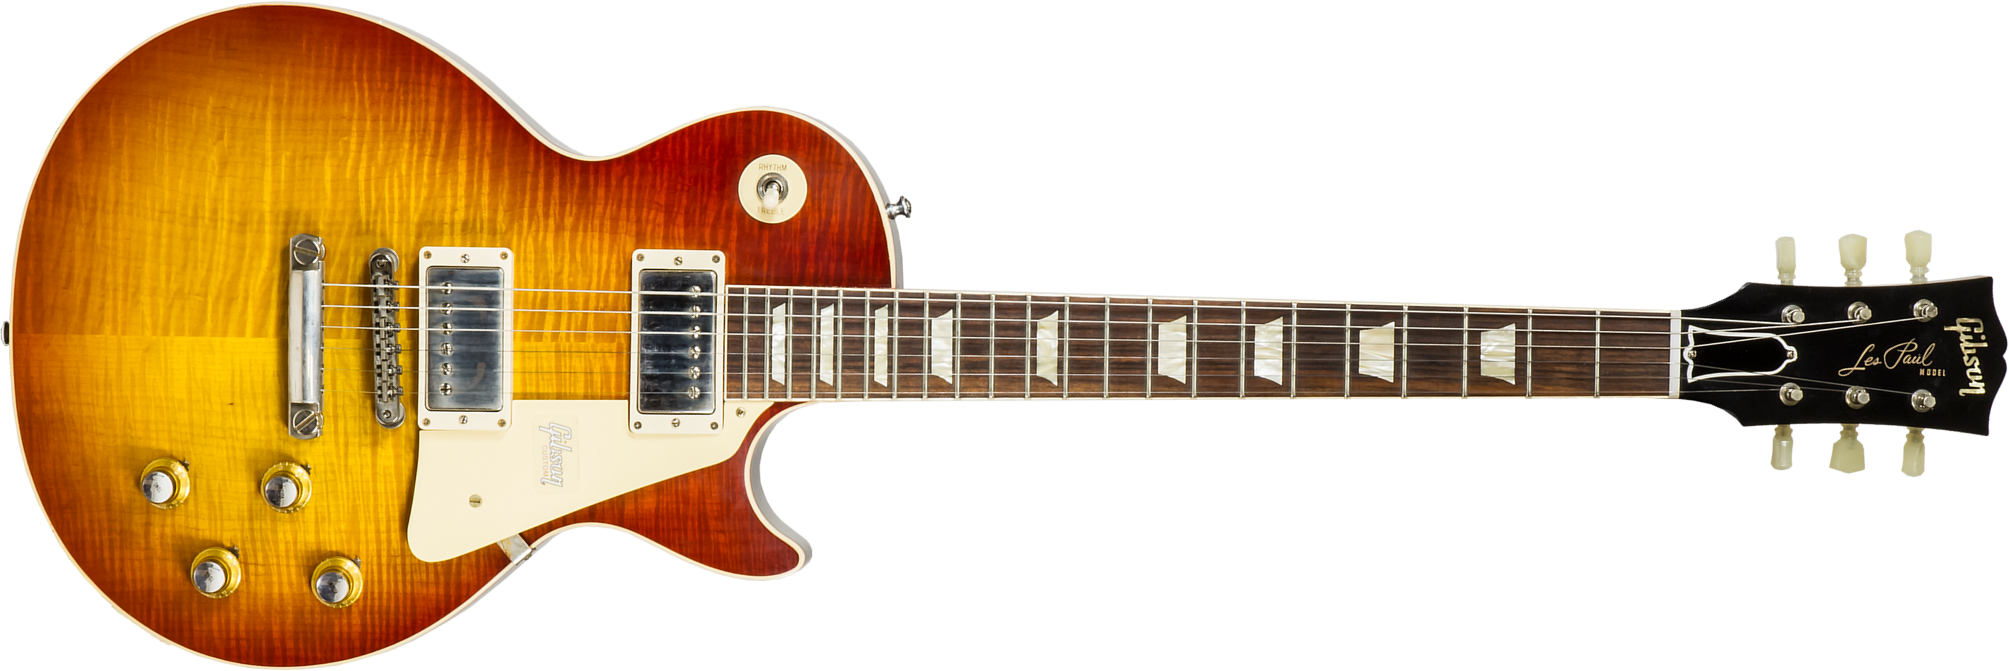 Gibson Custom Shop Les Paul Standard 1960 V2 60th Anniversary 2h Ht Rw #00492 - Vos Tomato Soup Burst - Enkel gesneden elektrische gitaar - Main pictu